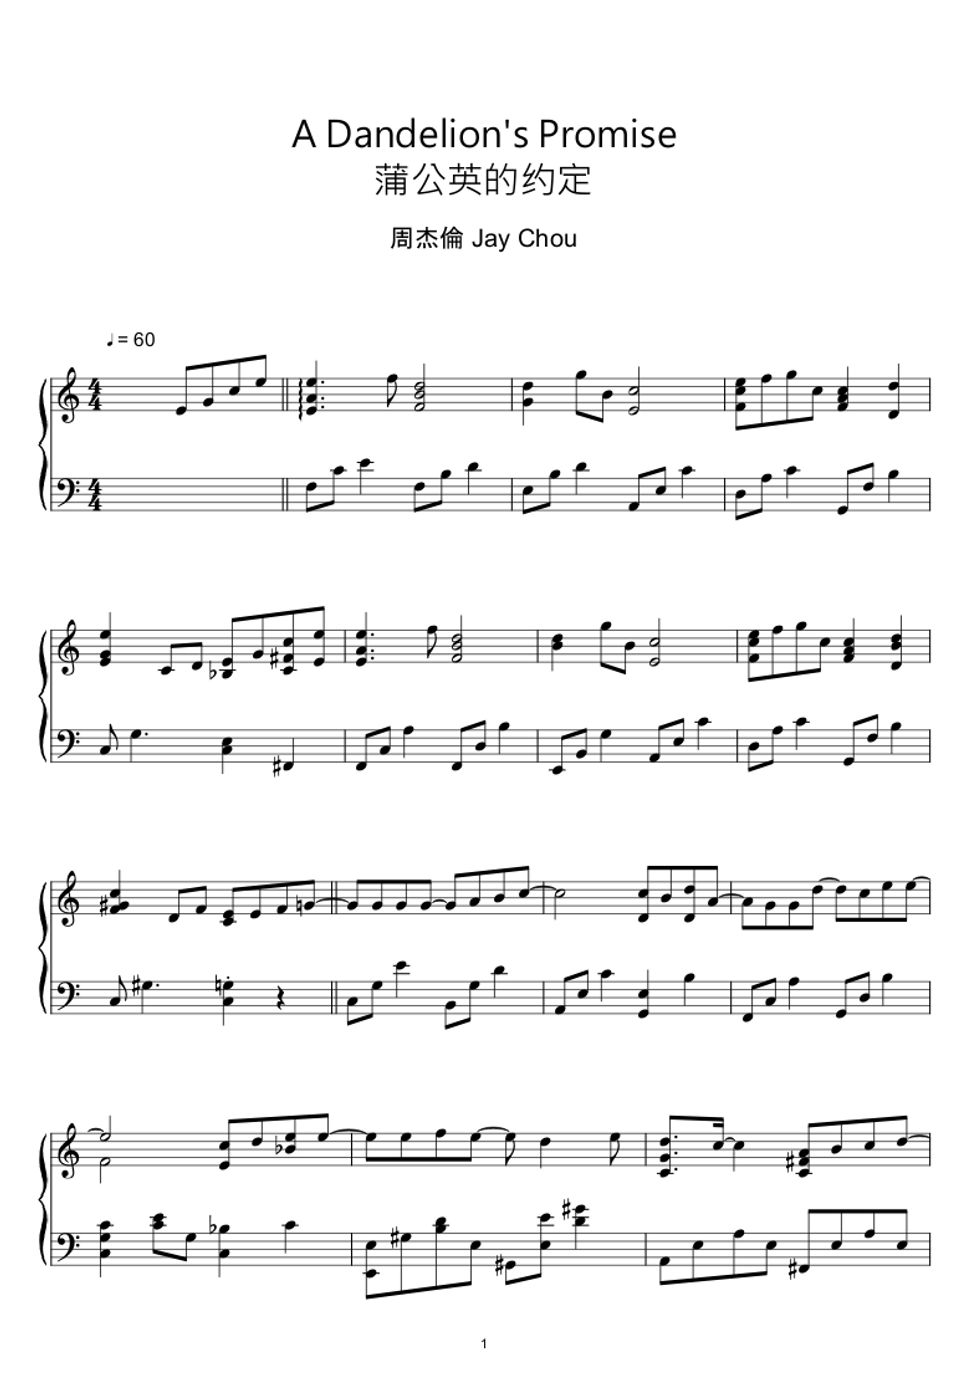 周杰倫 (Jay Chou) - 蒲公英的約定 (A Dandelion's Promise) (Sheet Music, MIDI,) by sayu